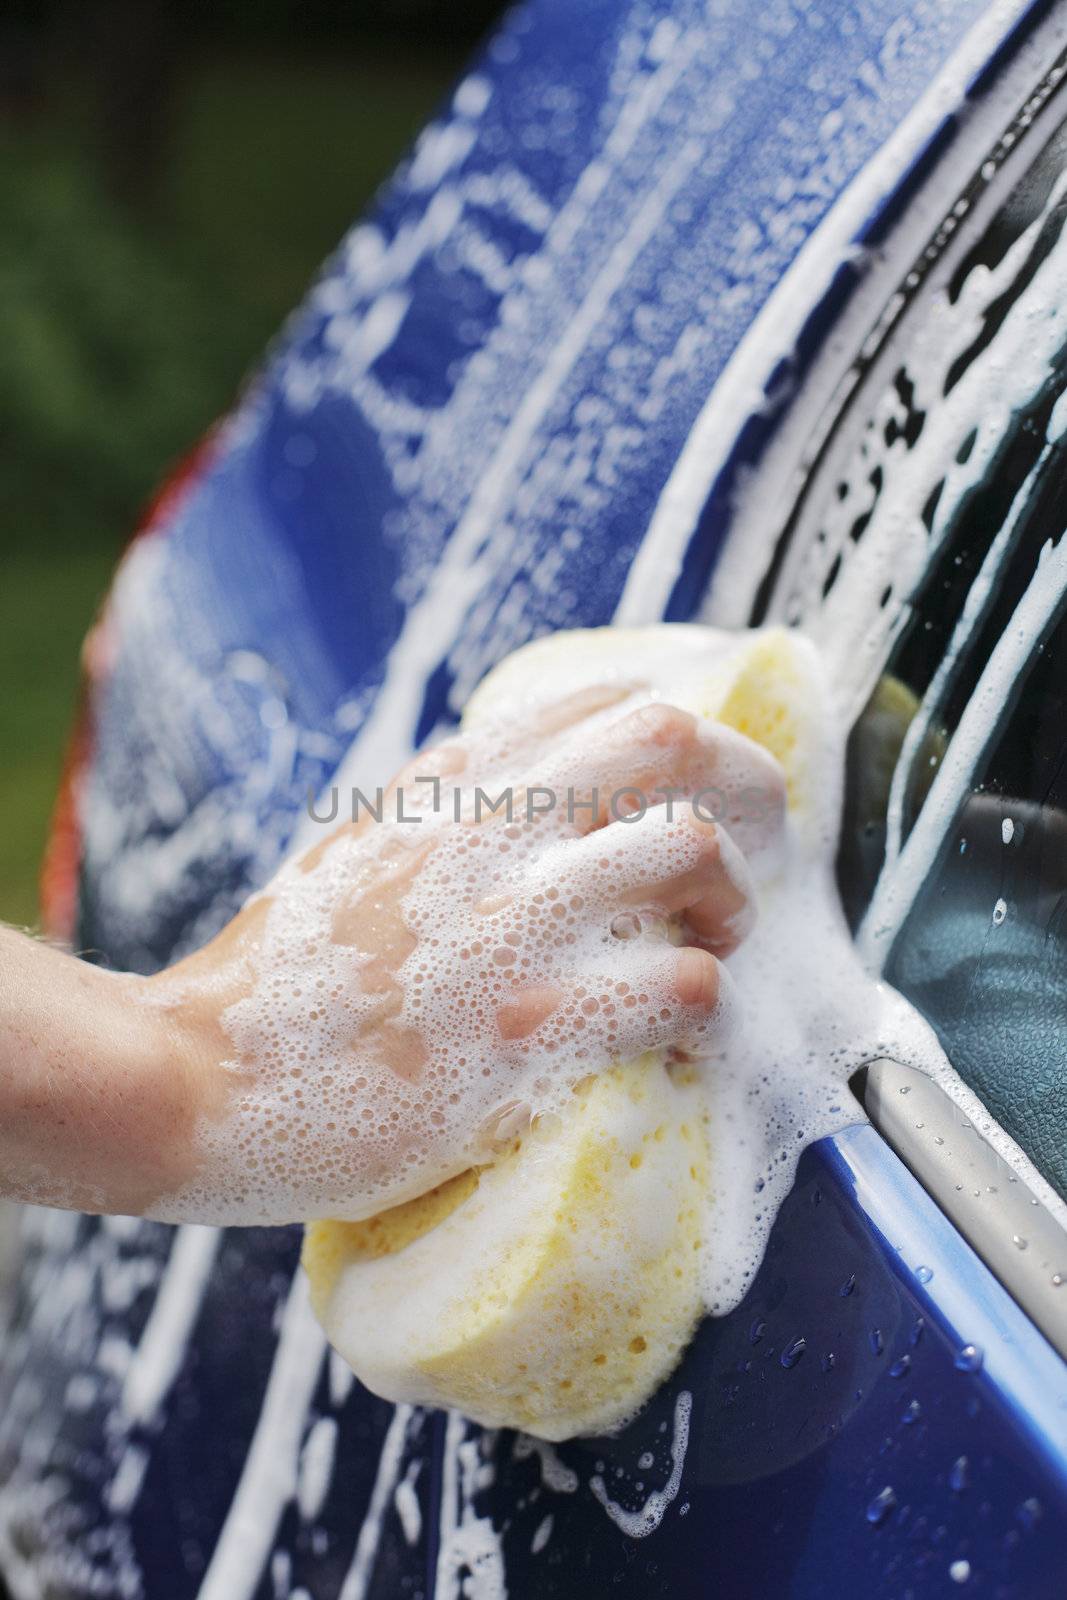 A Hand washing a blue car with a sponge